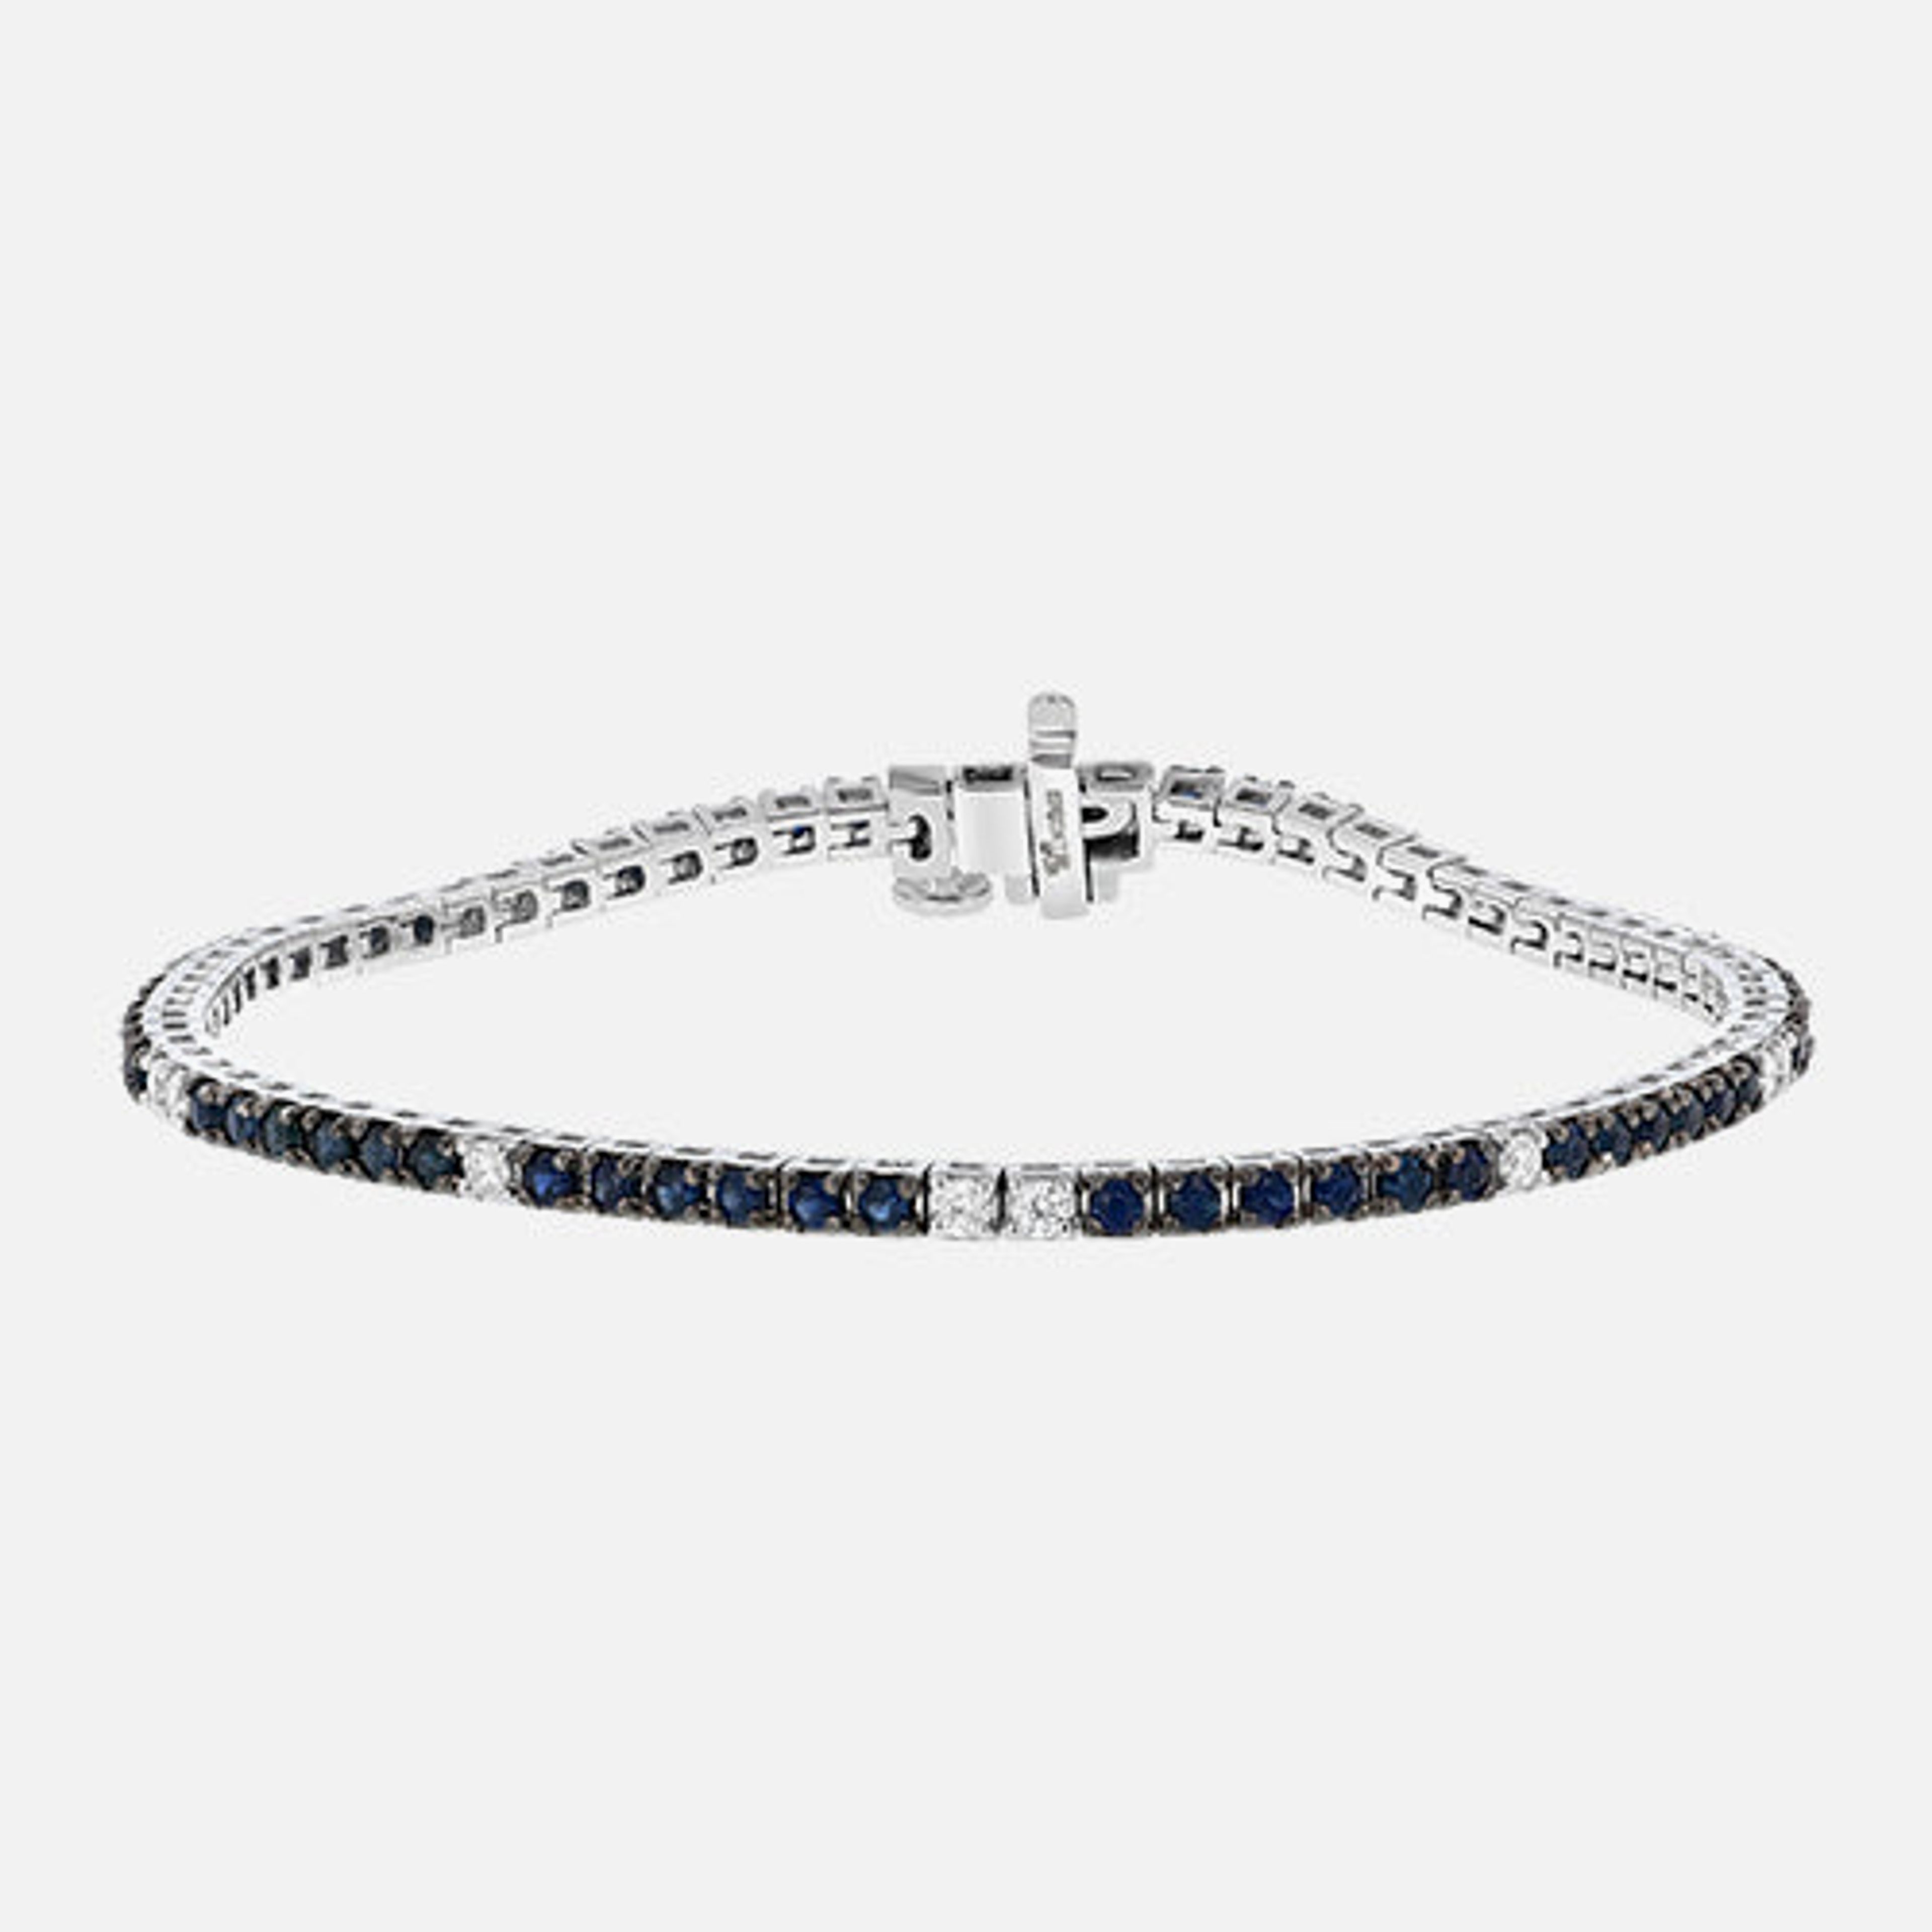 The Blue Sapphire and White Diamond Tennis Bracelet